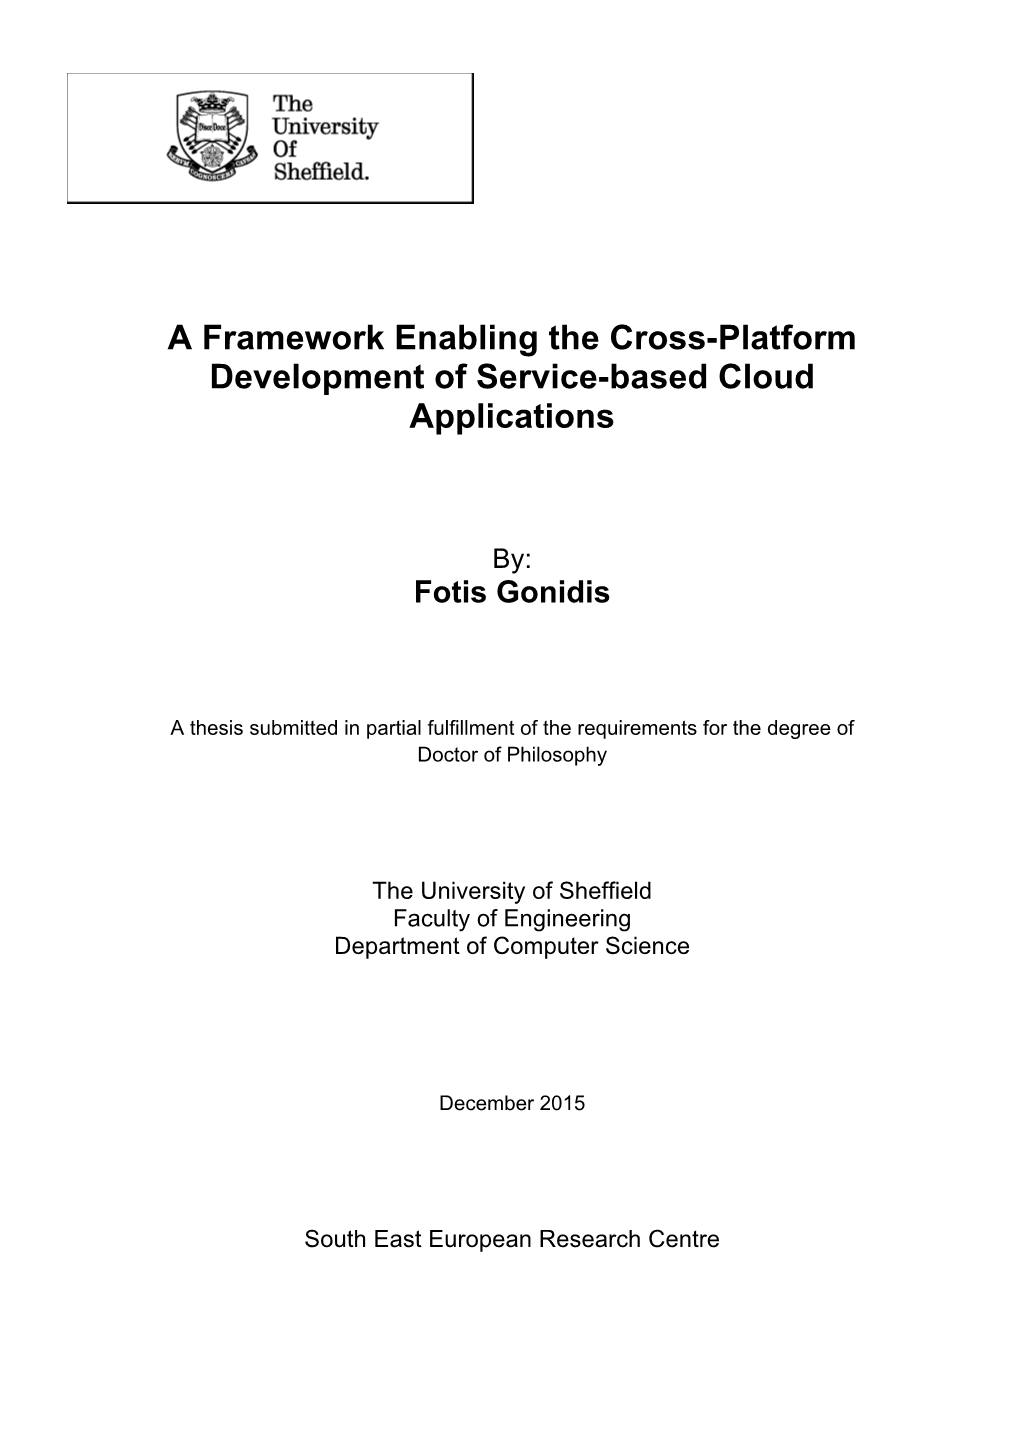 A Framework Enabling the Cross-Platform Development of Service-Based Cloud Applications